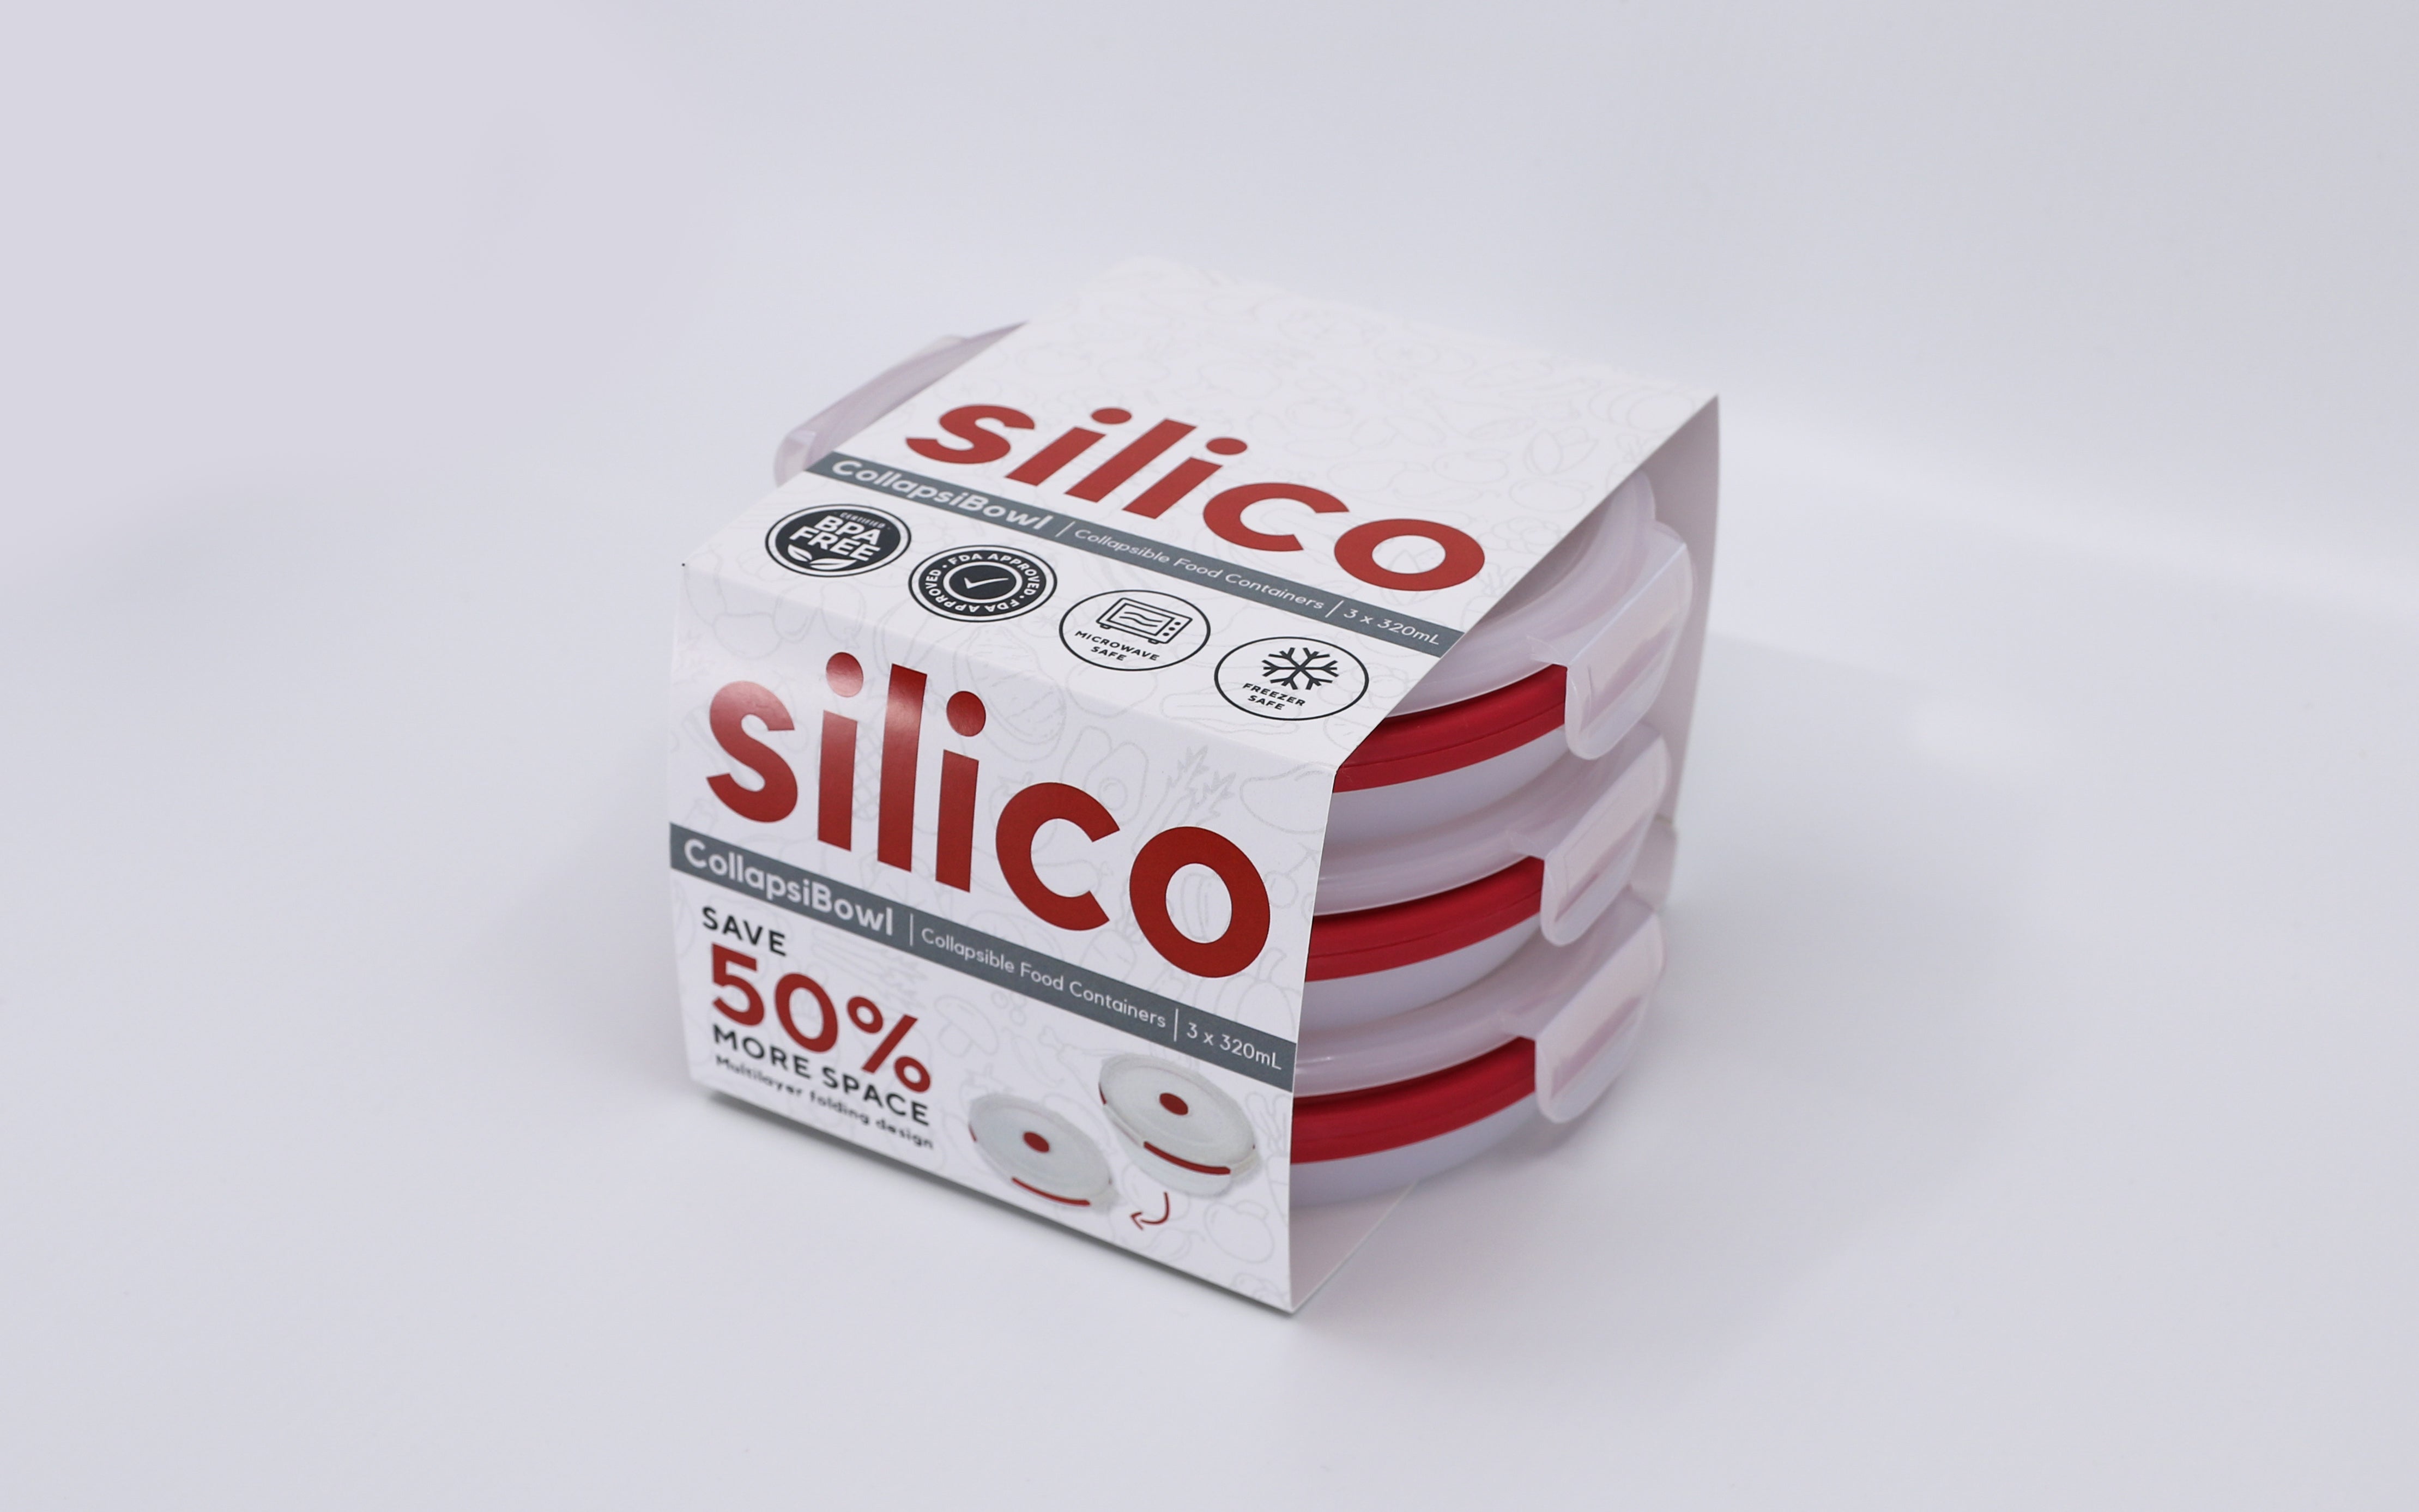 Silico CollapsiBowl Small (Set of 3 - 320 mL)